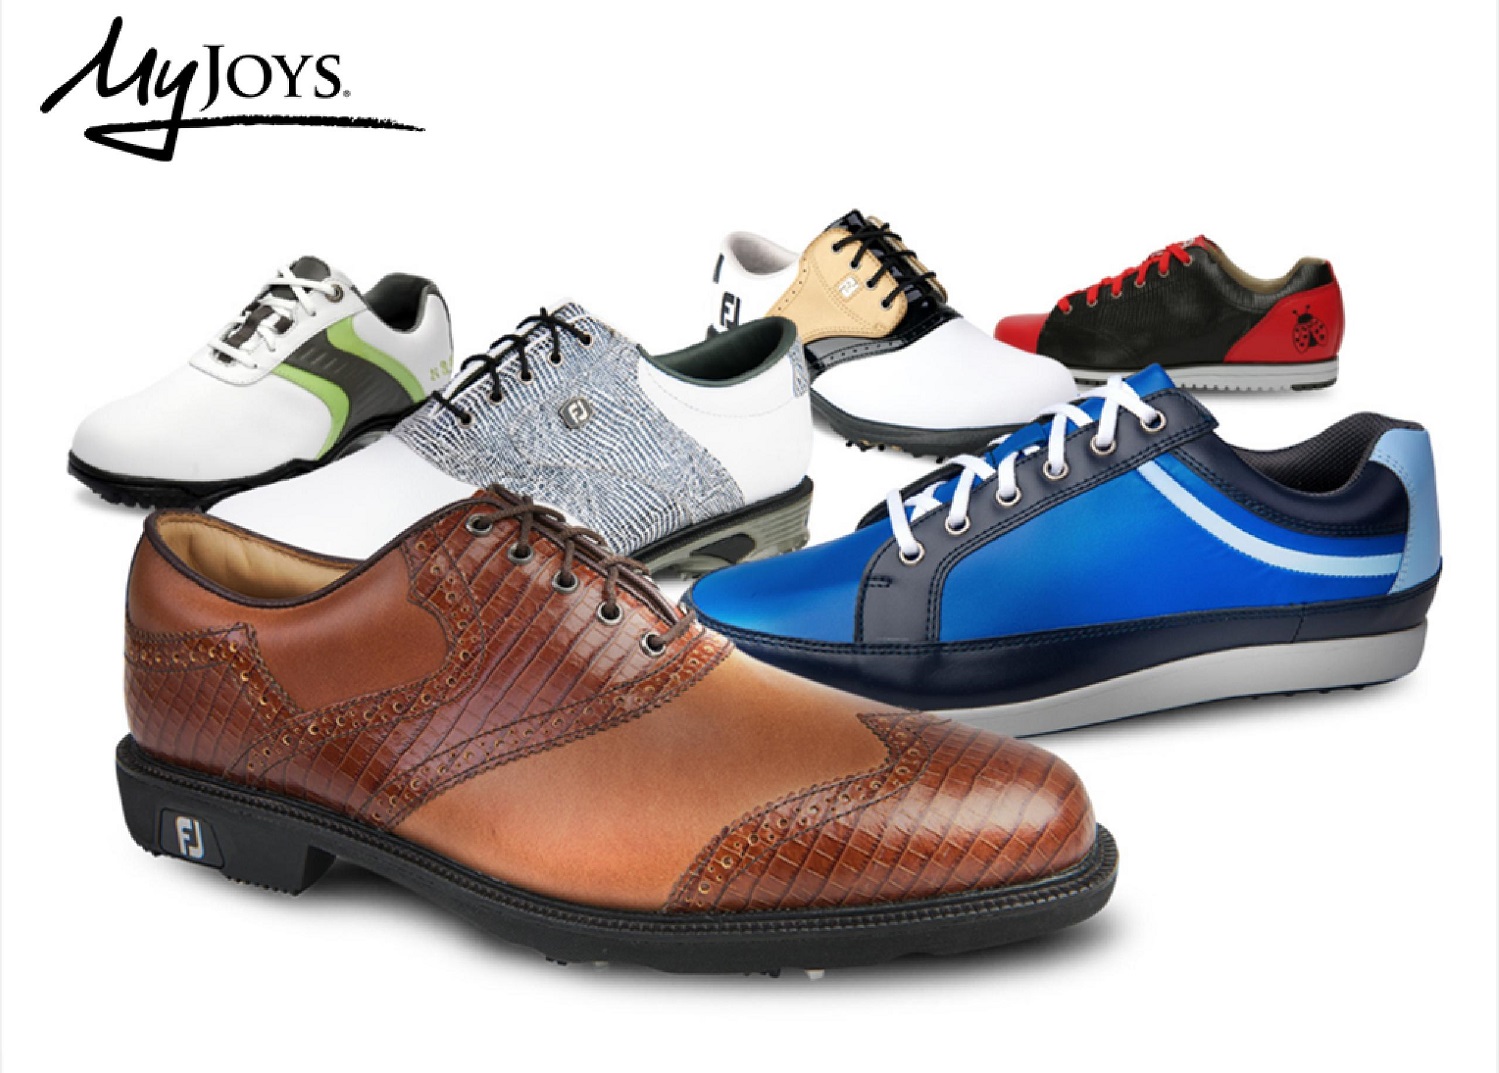 My Joys Custom Golf Shoes - Foot Joy 